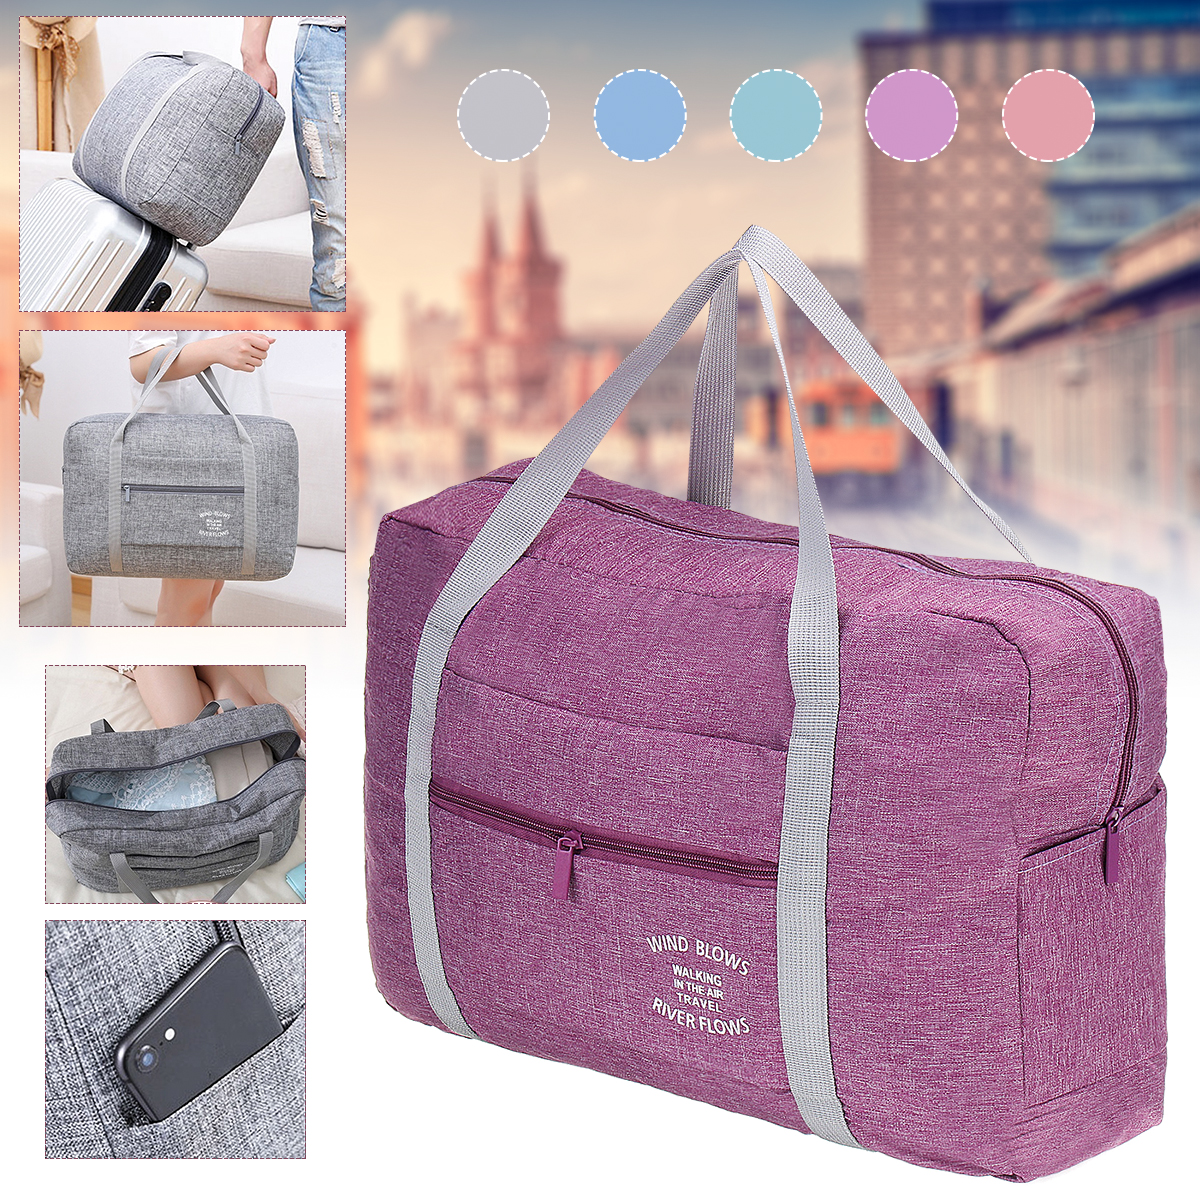 Oxford-Cloth-40x30x13cm-Foldable-Travel-Storage-Bag-Waterproof--Luggage-Bag-Hand-Shoulder-Bag-Carry--1667293-1